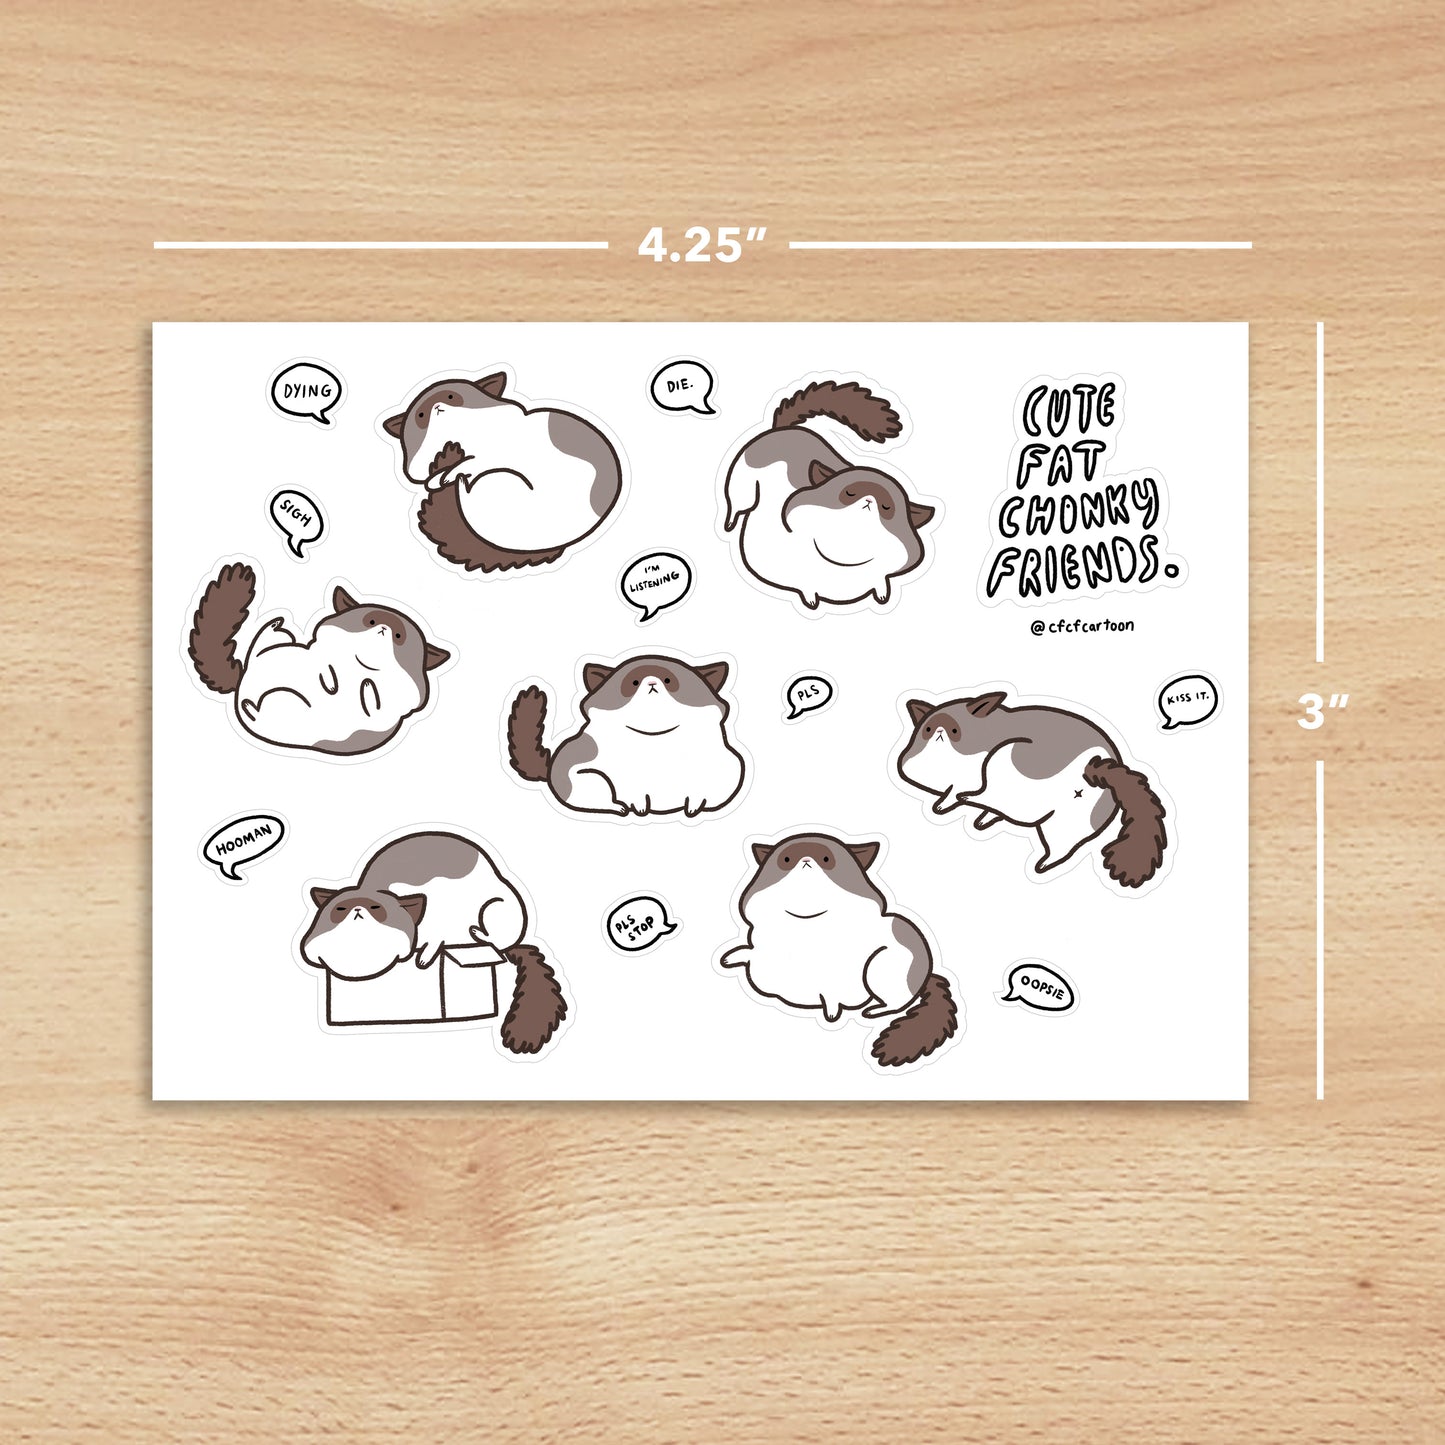 Cute Chonky Cat Sticker Sheet